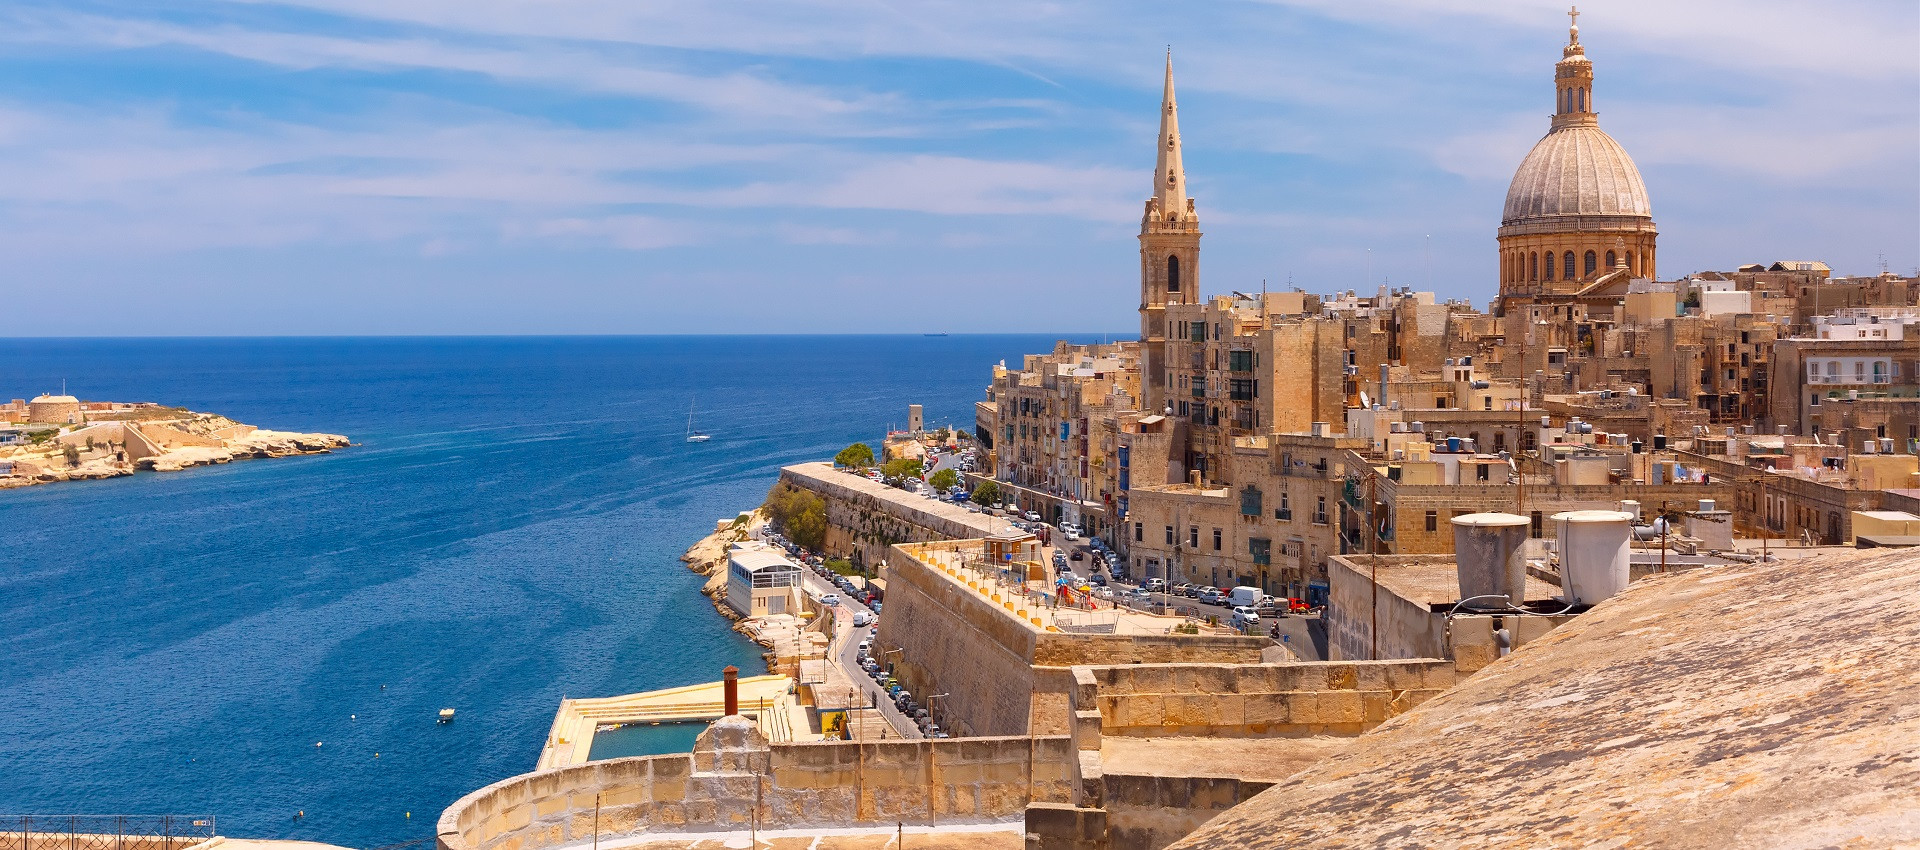 Haydi, bu yaz Malta’ya gidiyoruz!